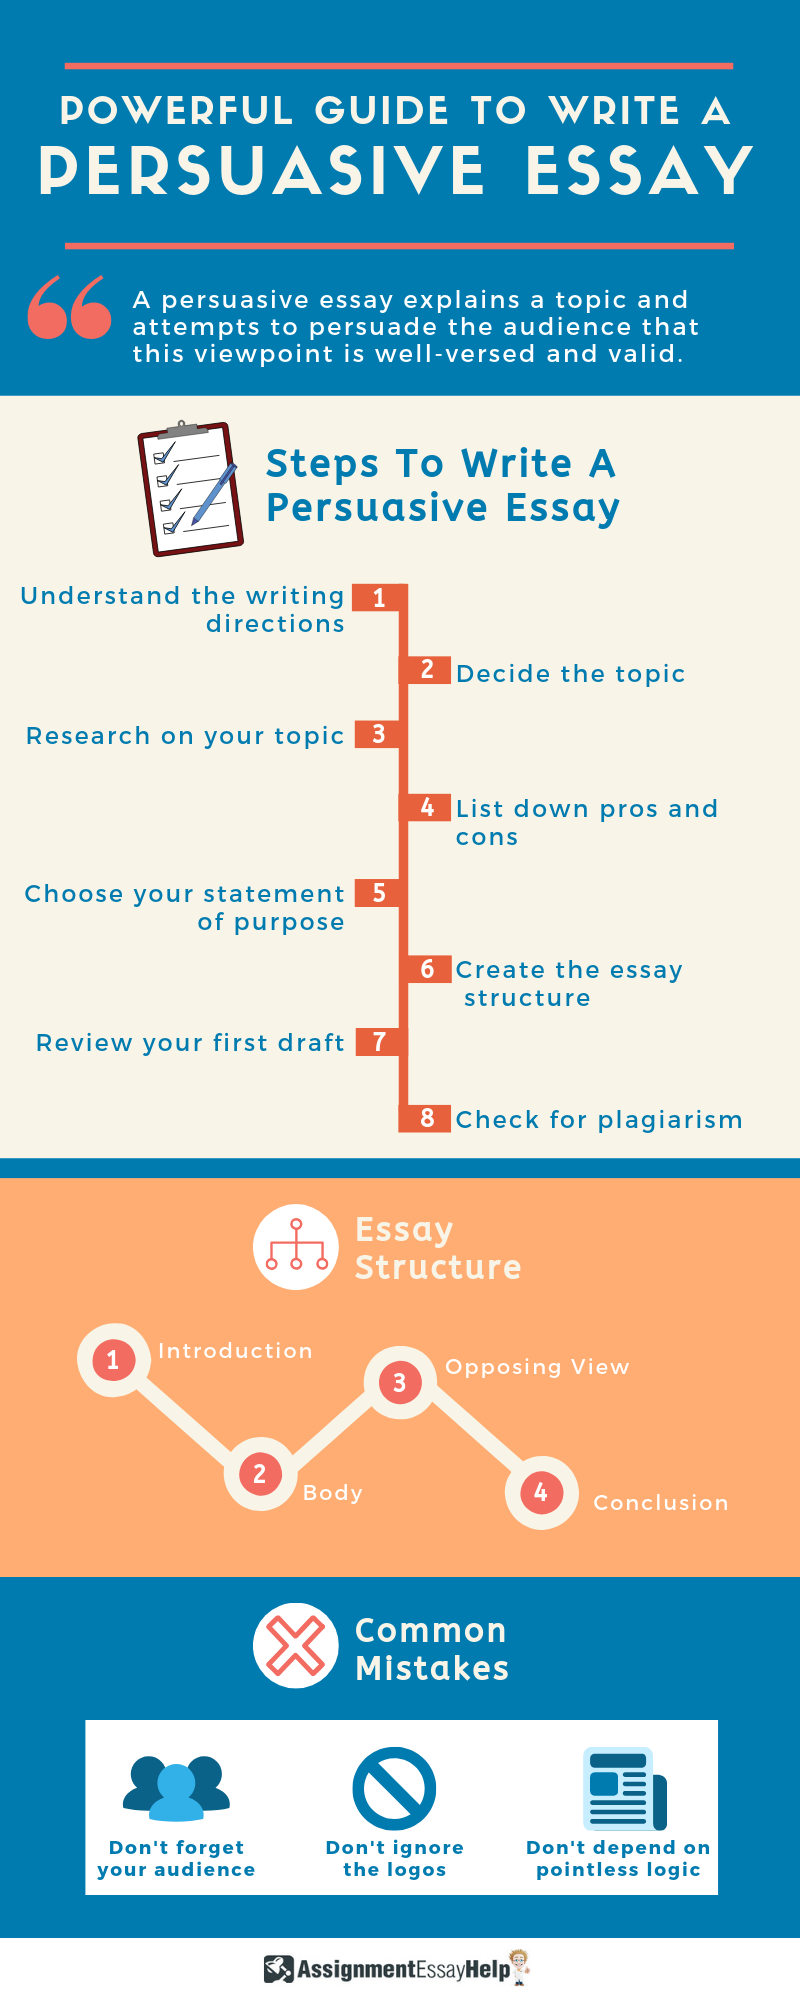 Argumentative Essay Examples - PDF | Examples